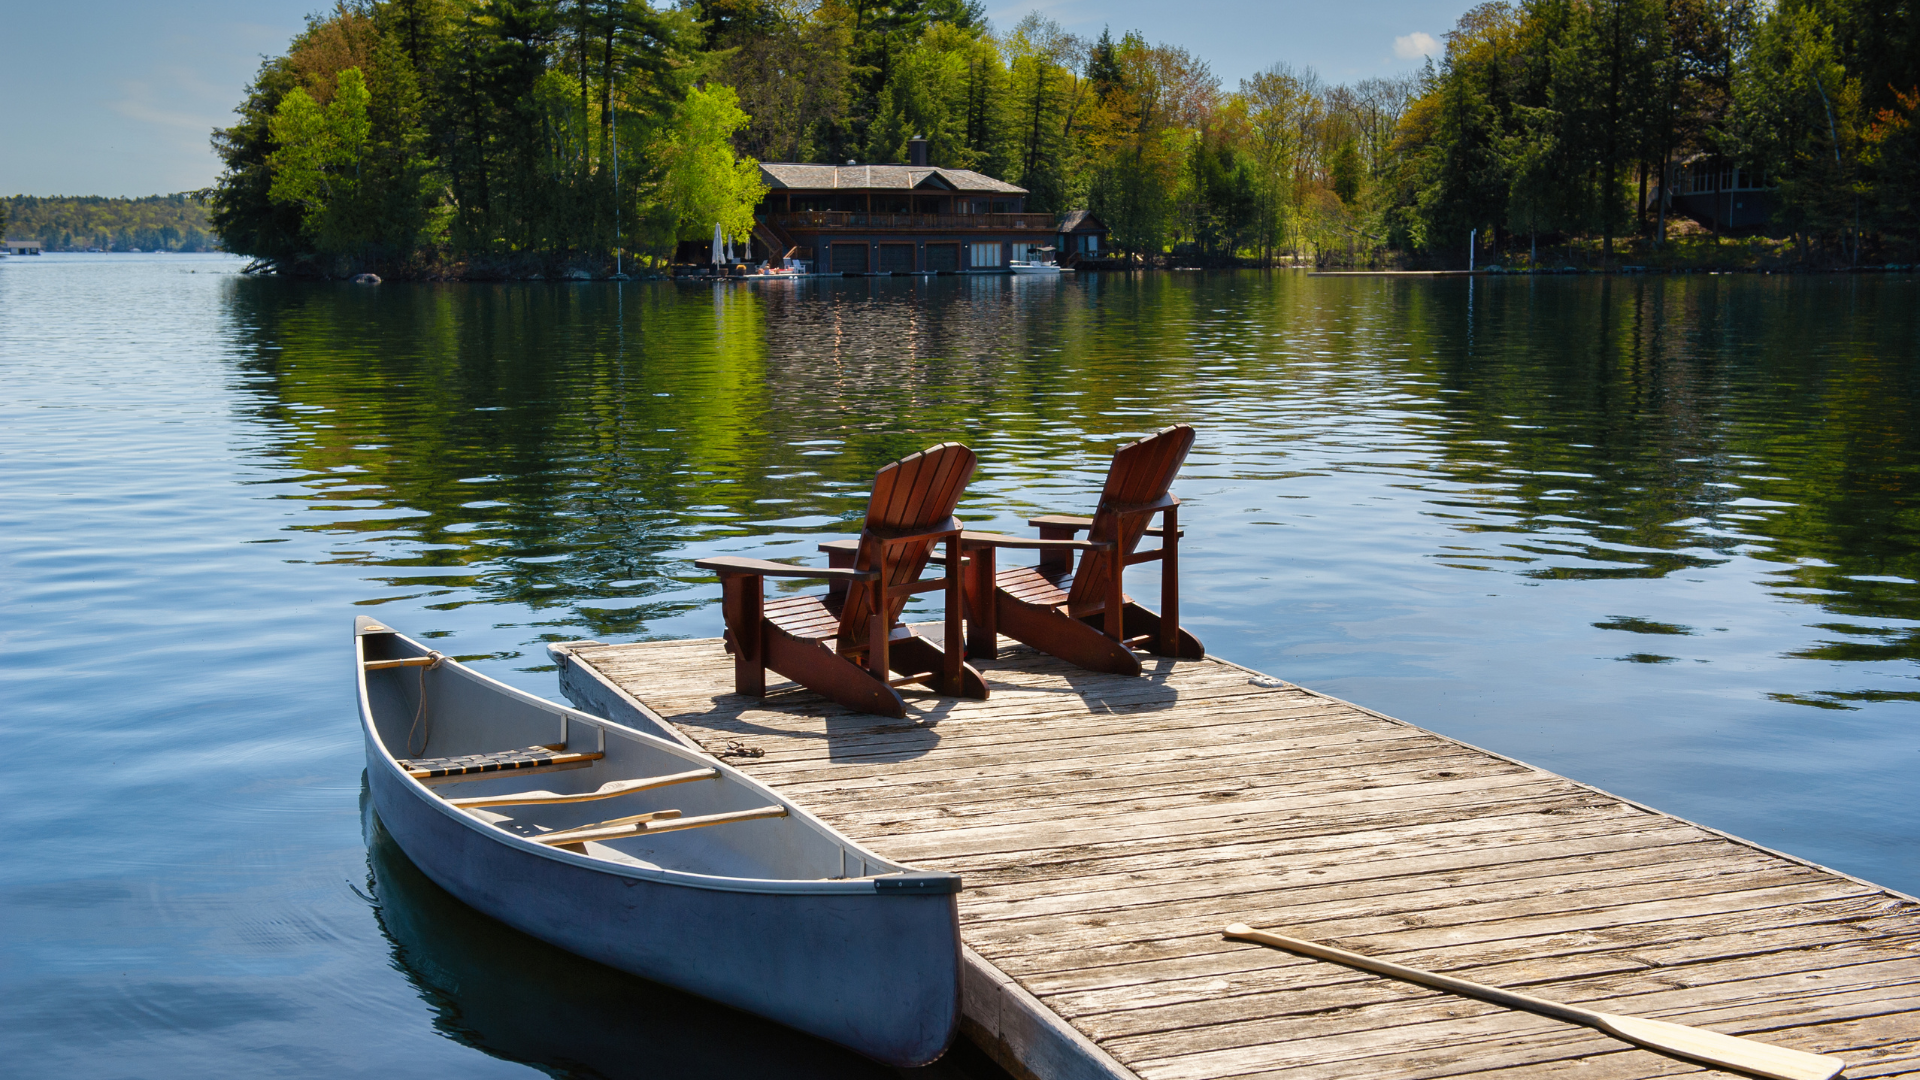 Muskoka chairs sitting on a wood dock facing a calm lake.